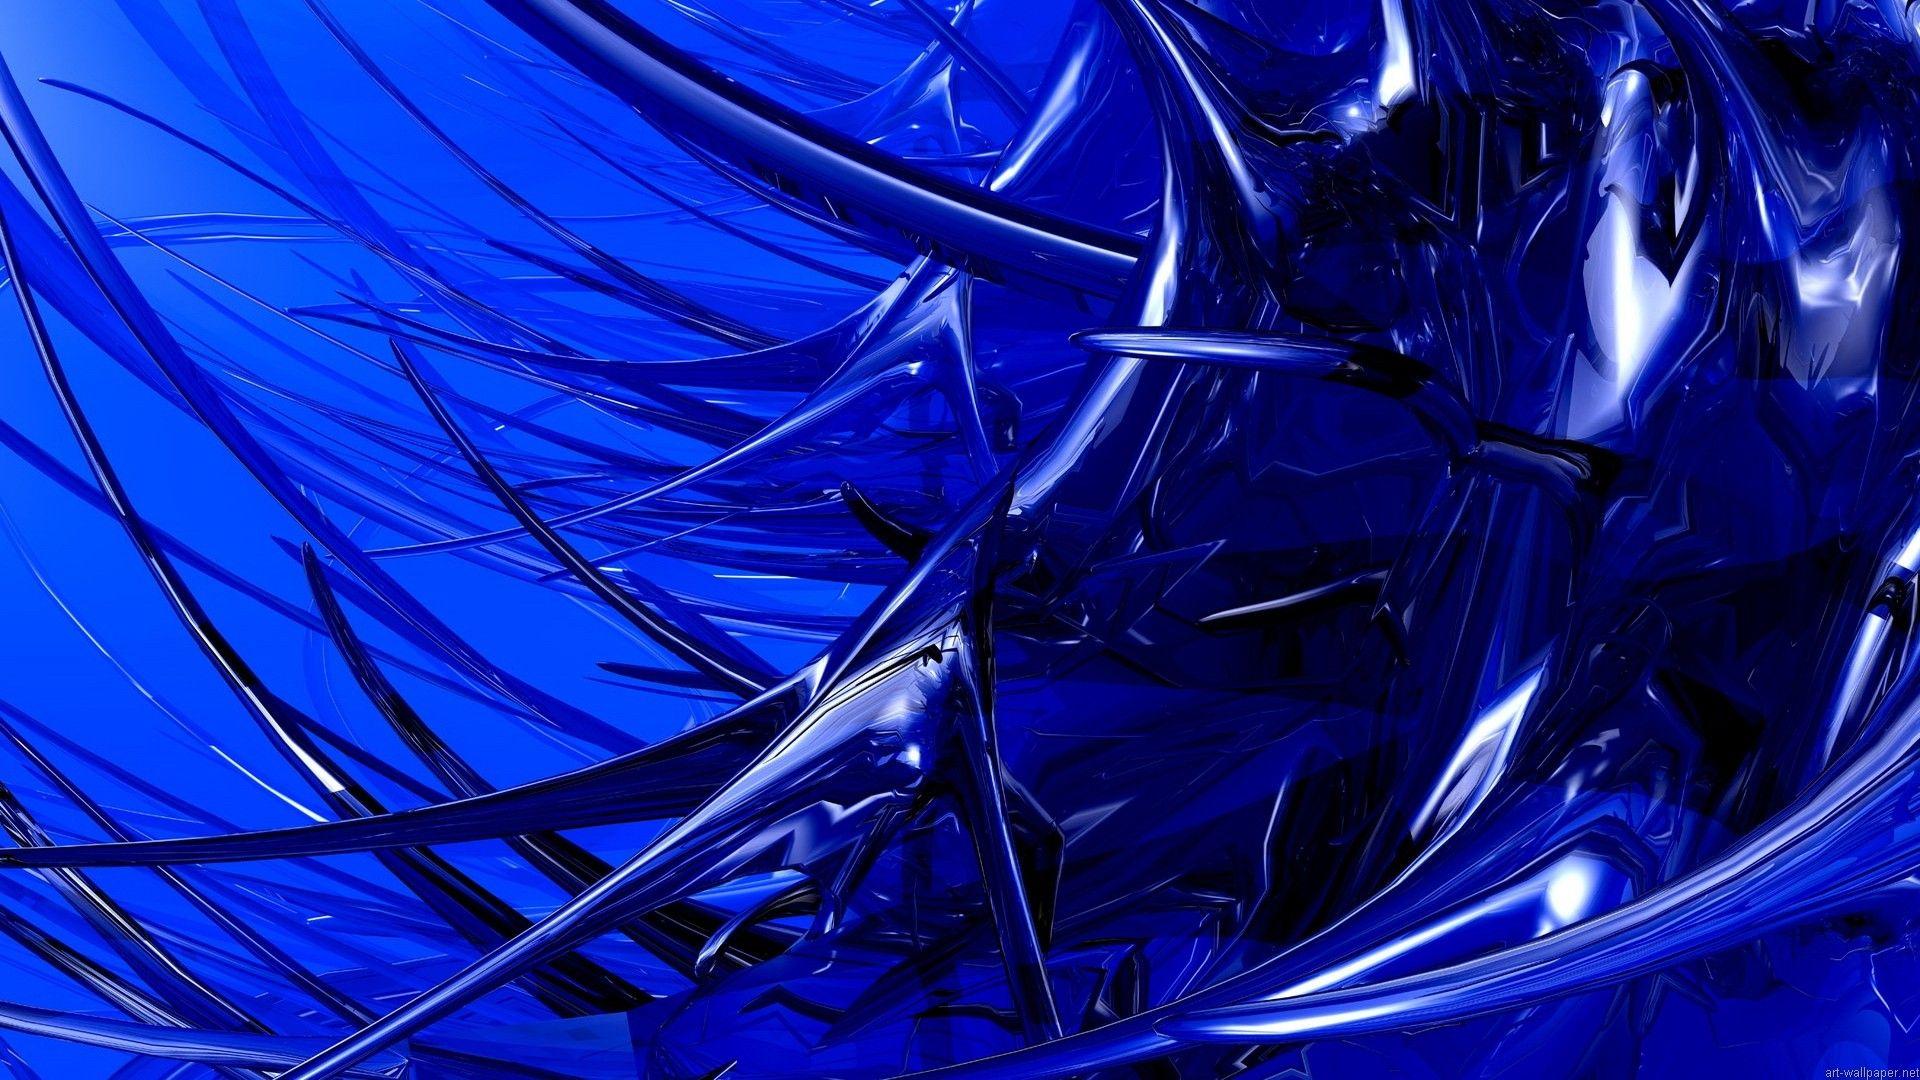 blue abstract wallpaper hd 1080p